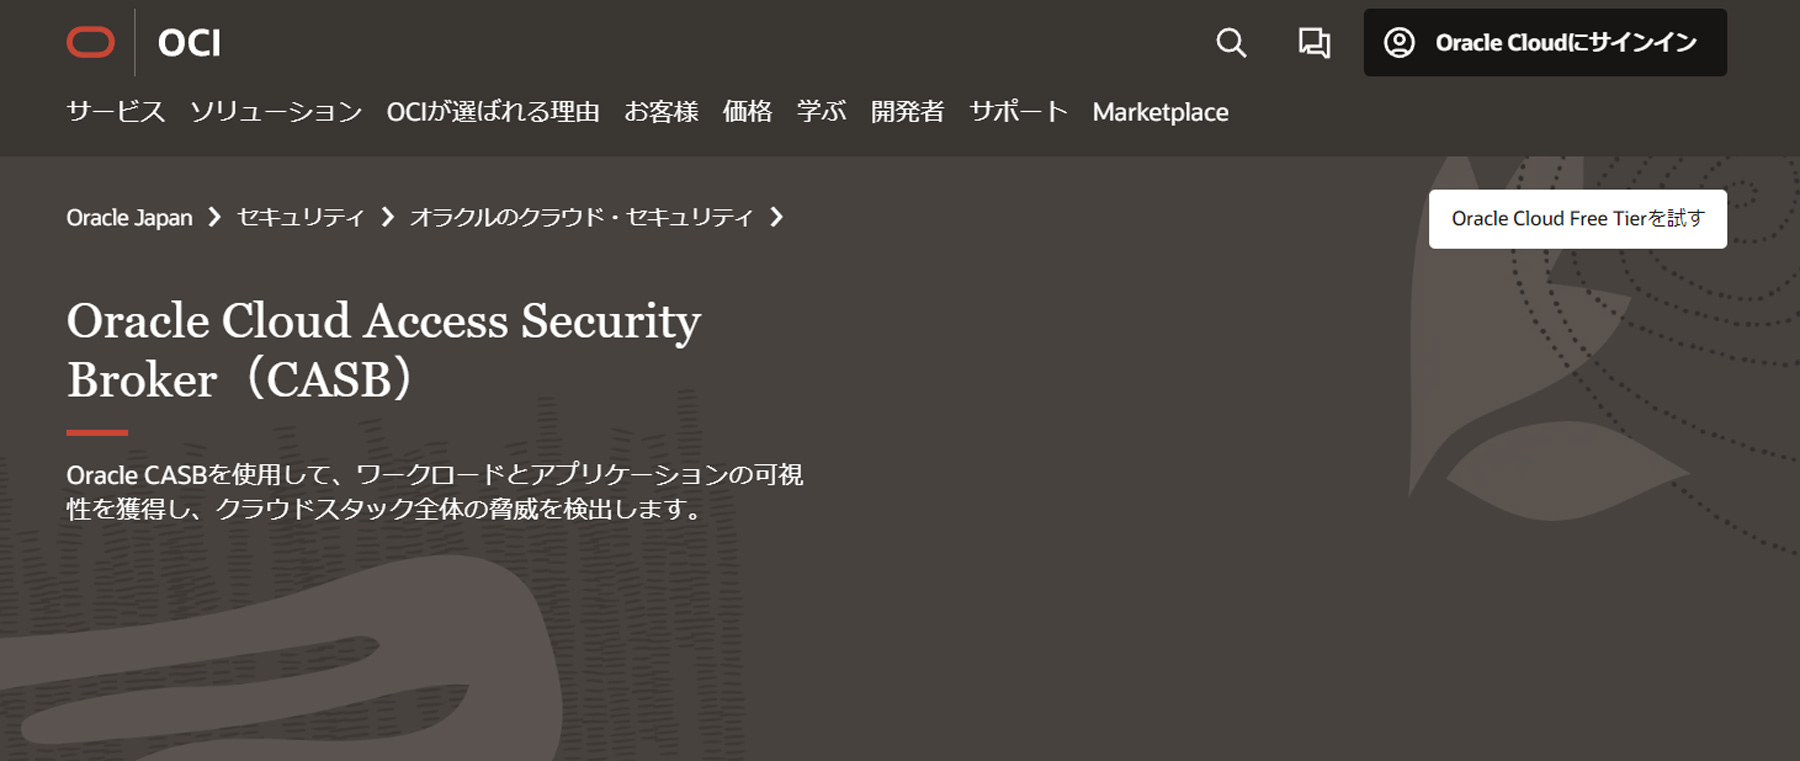 Oracle Cloud Access Security Broker公式Webサイト